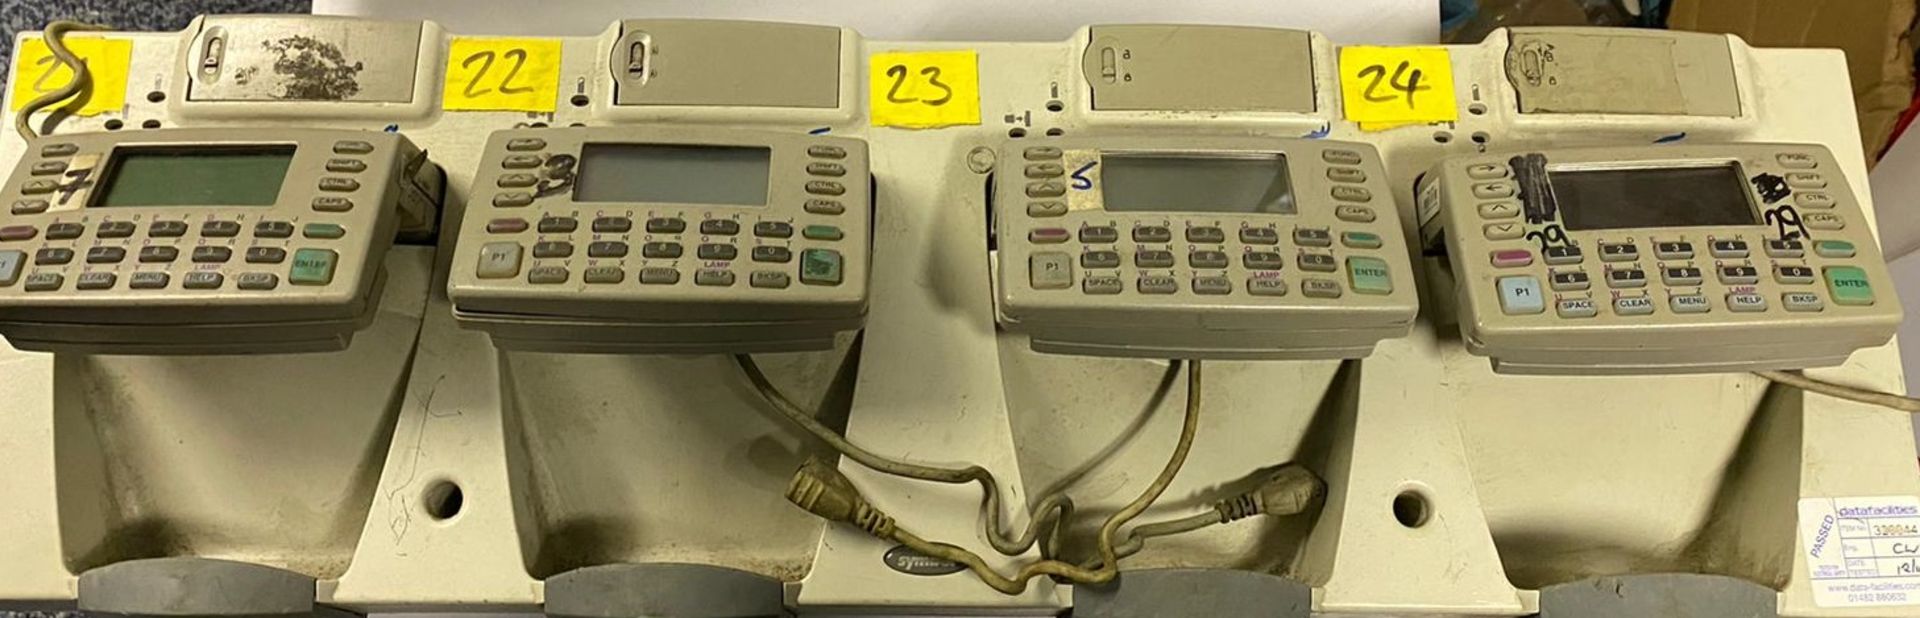 5 x Symbol Cradle 4 Slot Charger - Ref: CS1000-4401 - Used Condition - Location: Altrincham WA14 - Image 5 of 5